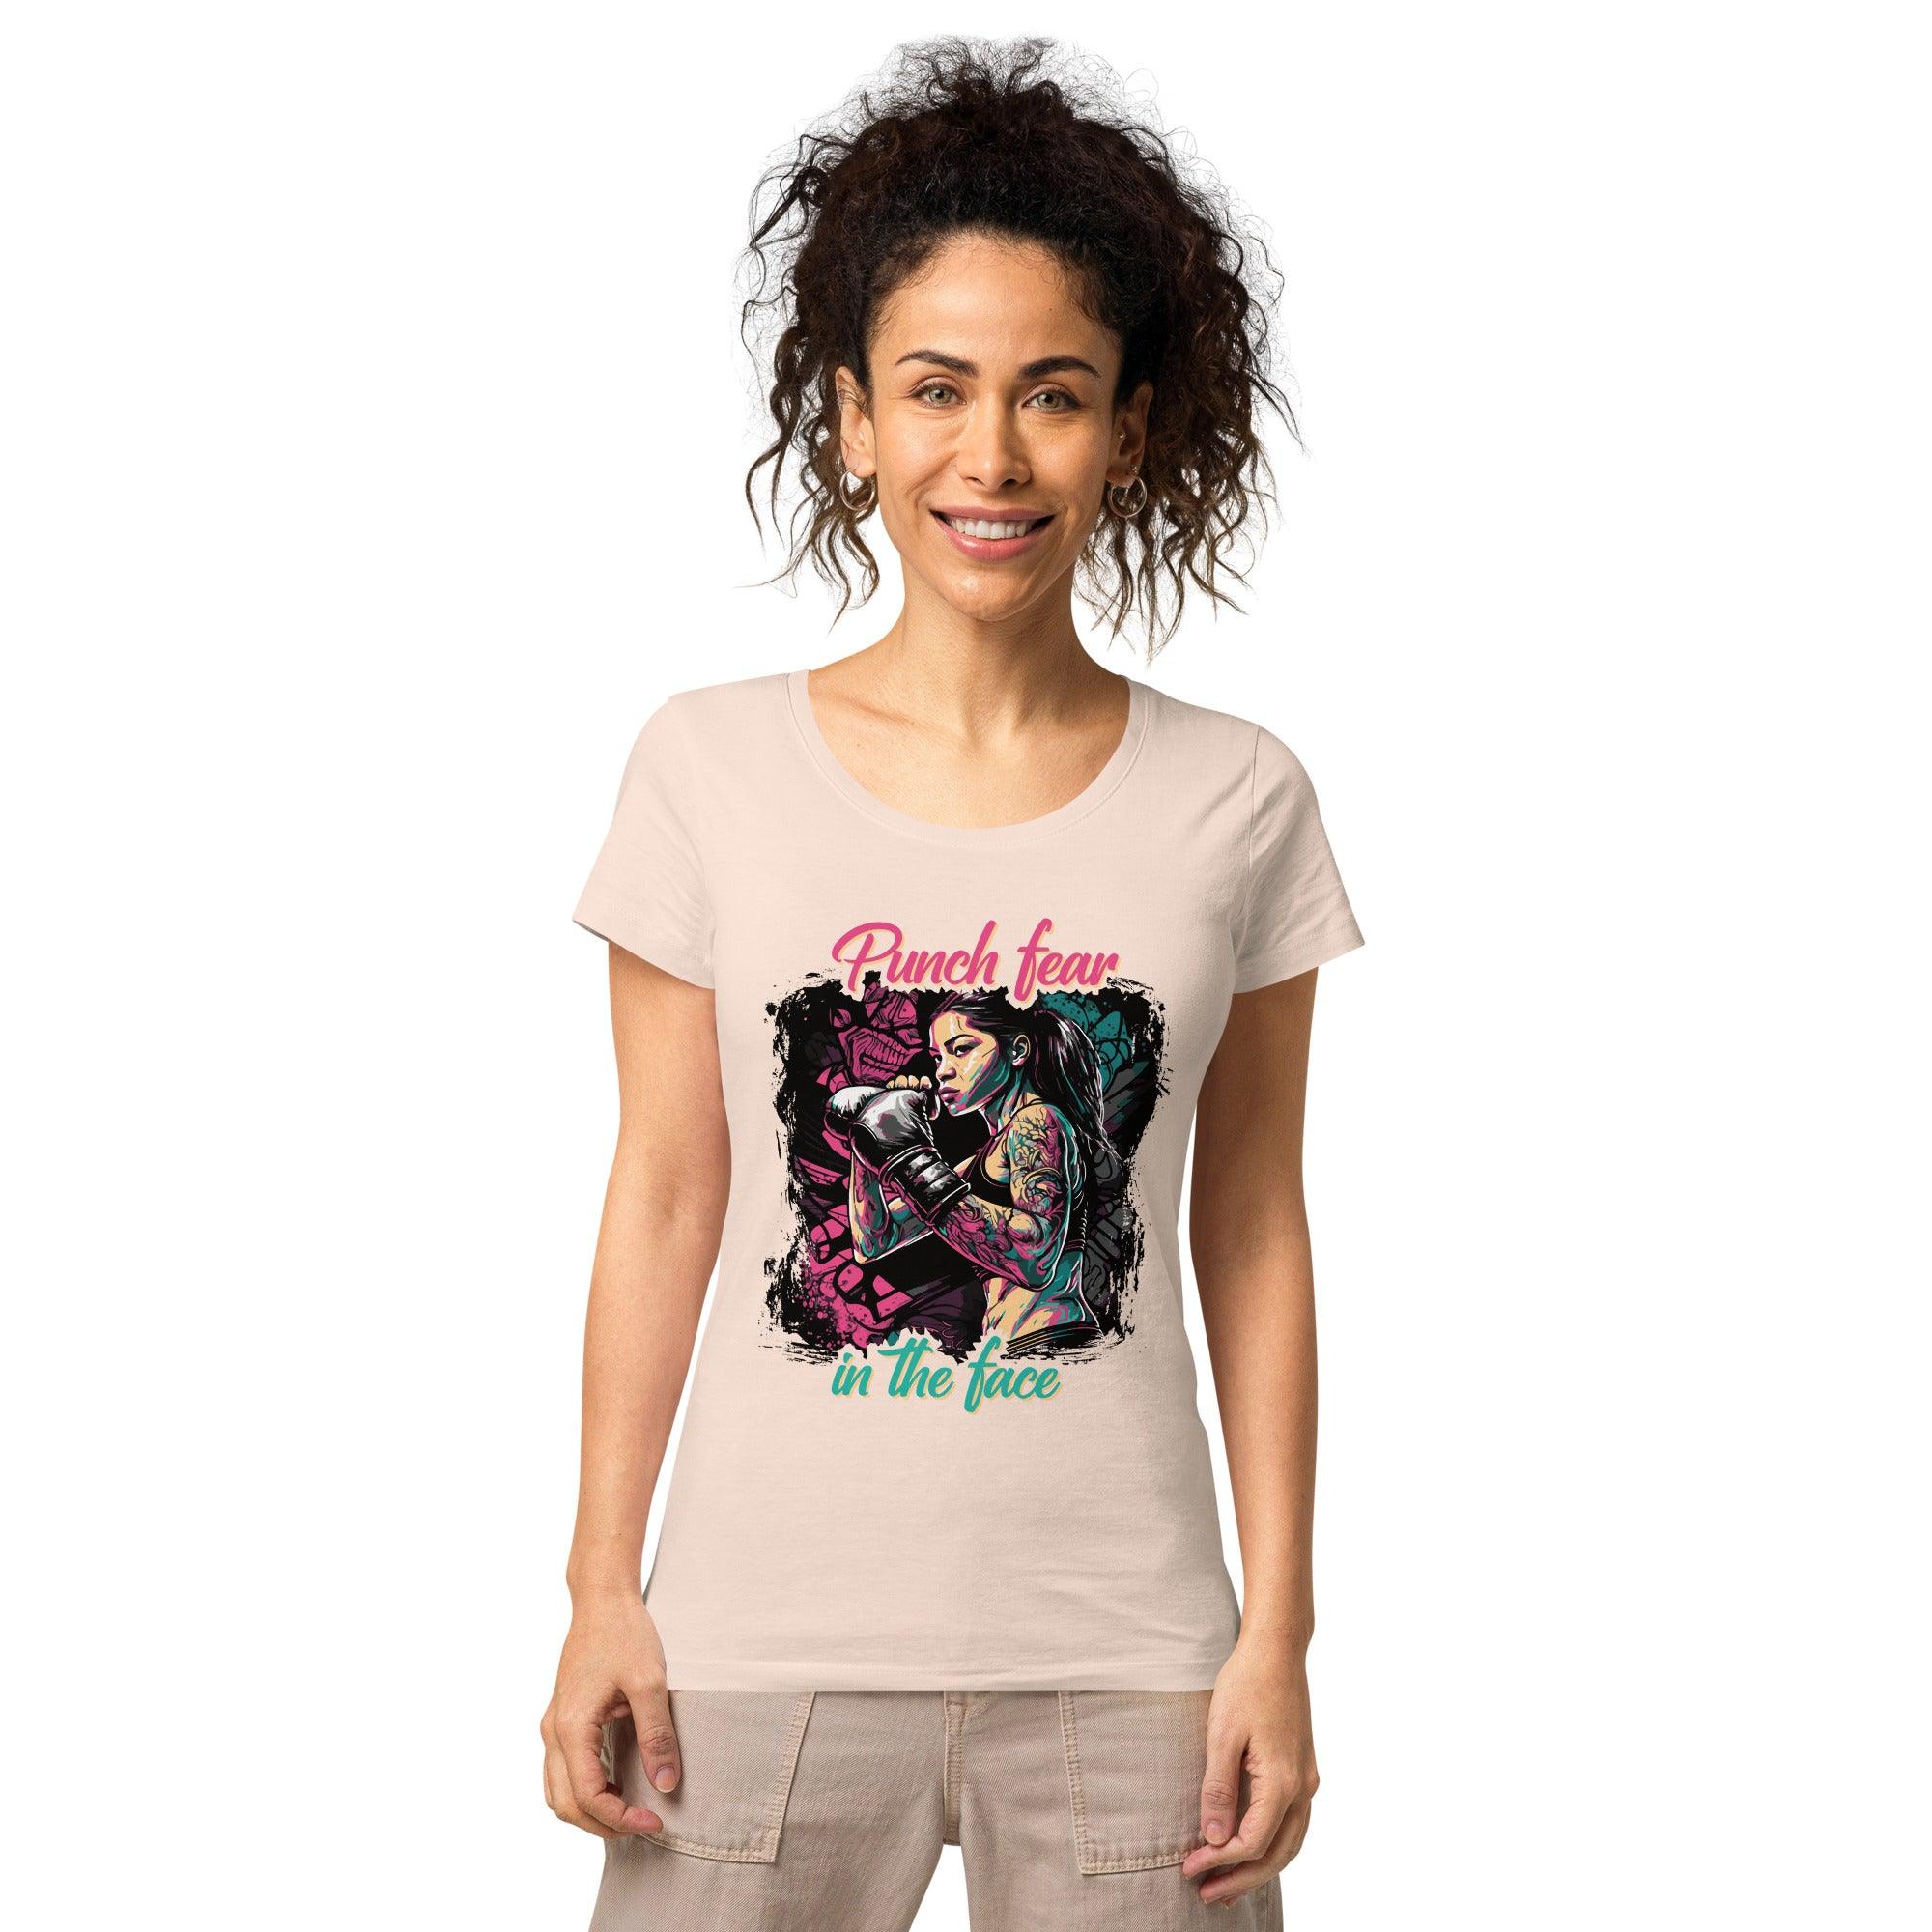 Punch Fear In The Face Women’s Basic Organic T-shirt - Beyond T-shirts